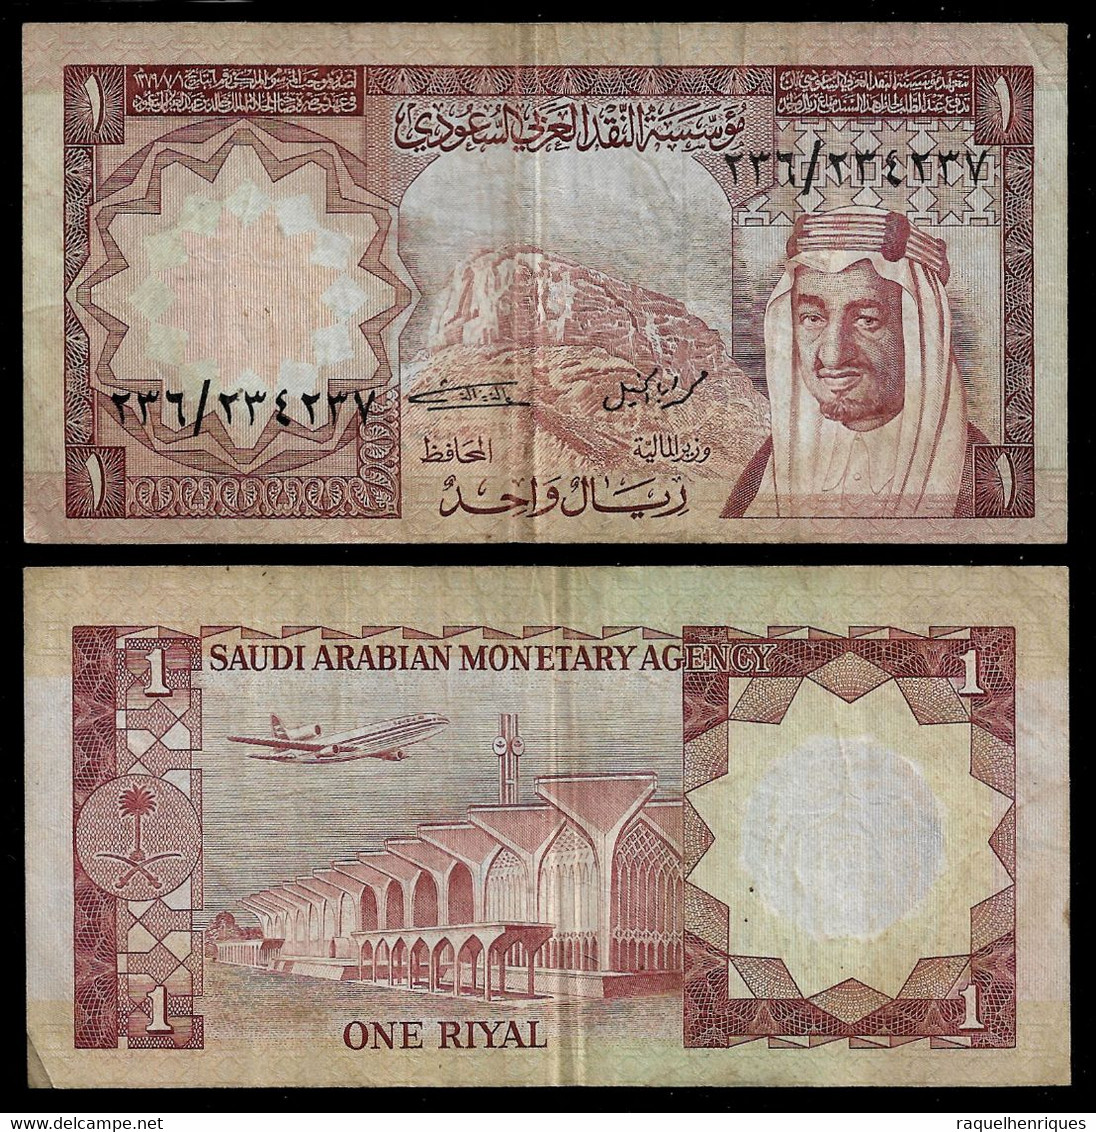 SAUDI ARABIA BANKNOTE - 1 RIYAL (1977) P#16 F/VF (NT#03) - Arabie Saoudite